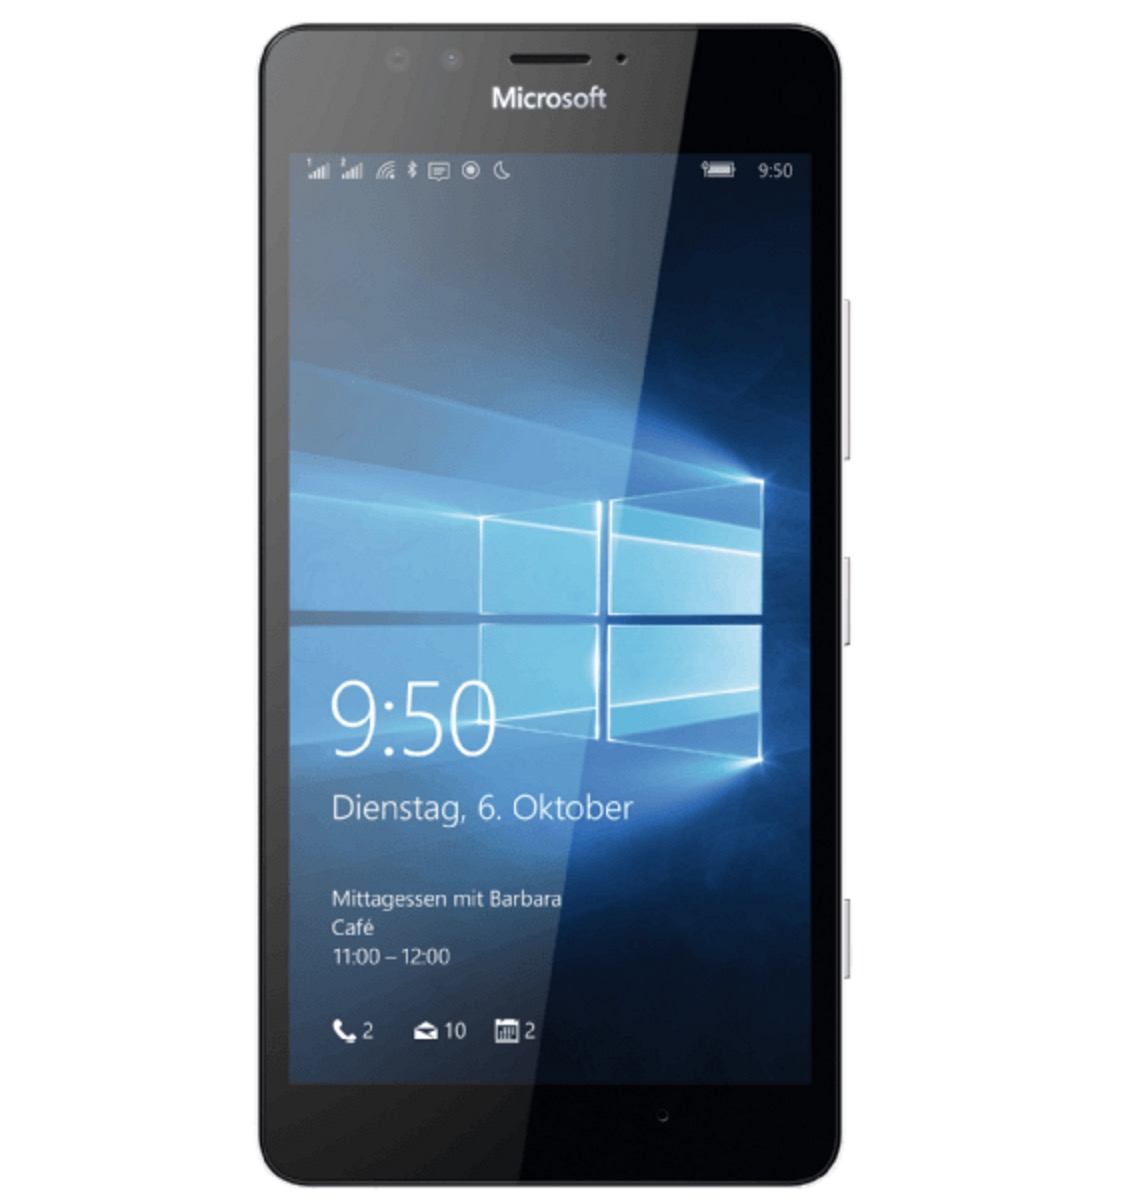 Microsoft Lumia 950 Dual SIM Smartphone (5,2 Zoll, 32 GB, Hexa-Core 1,8 GHz, 20 MP)  in Schwarz + Display Dock HD-500 + 1 Jahr Office 365 Personal für nur 279,- Euro inkl. Versand